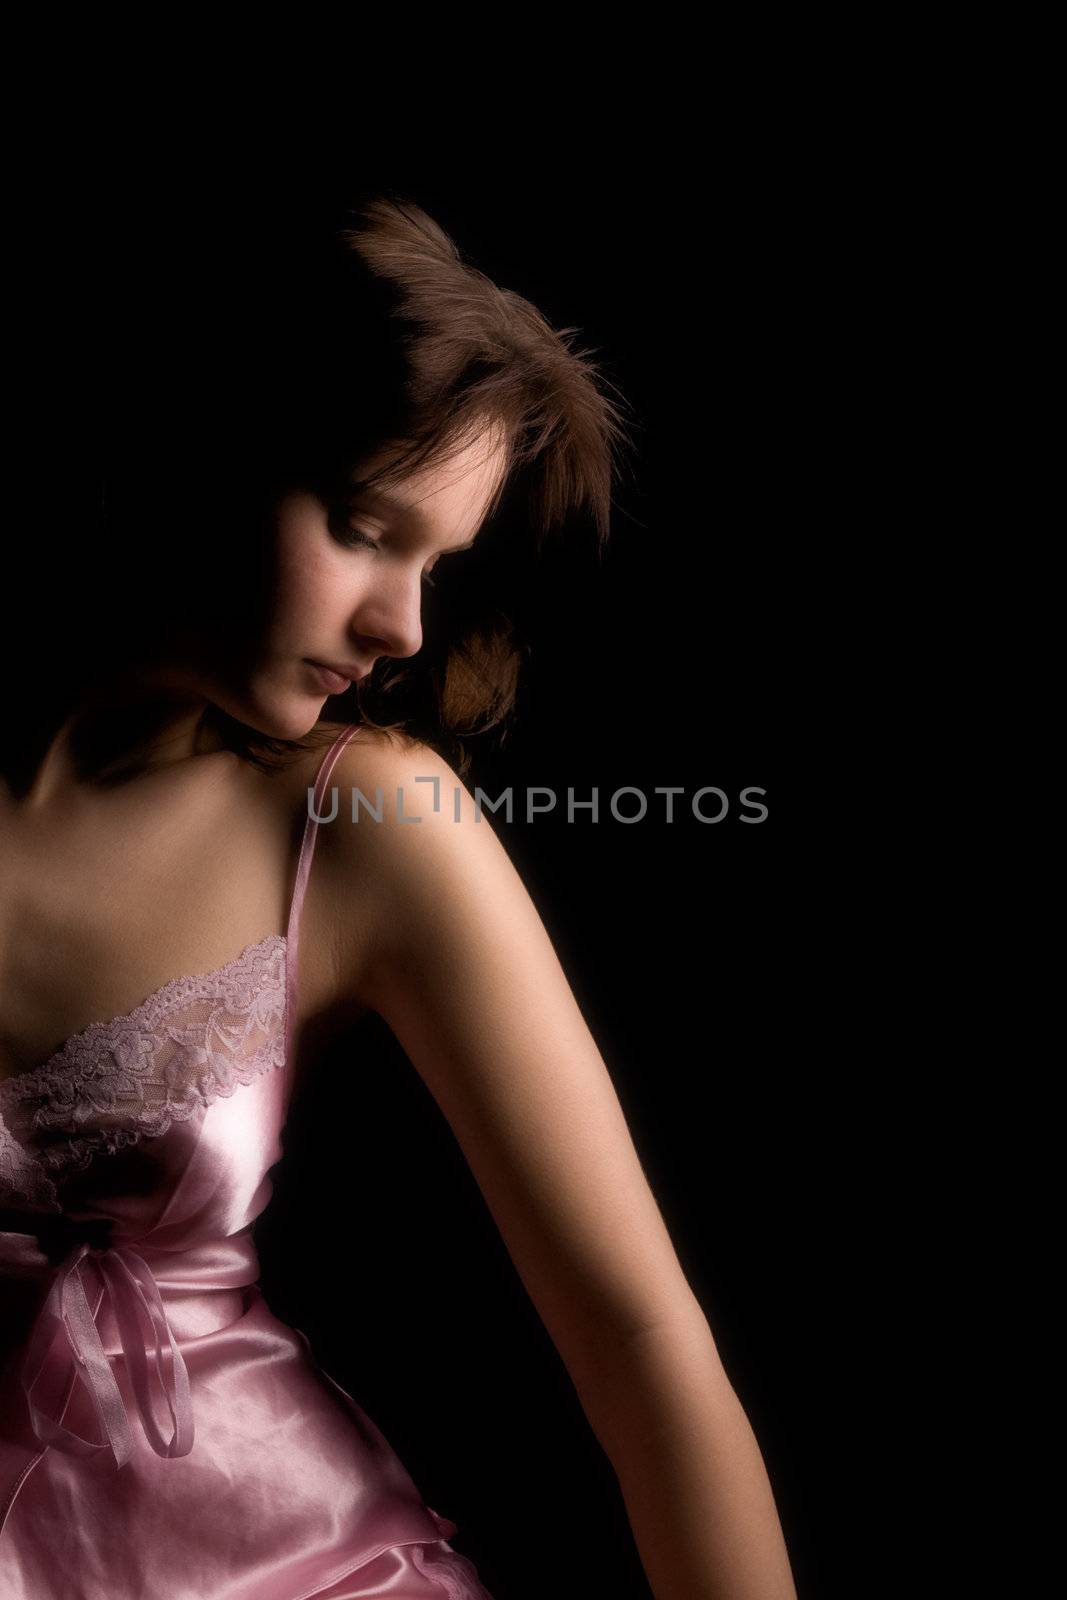 Studio portrait of a woman in luxurious lingerie in a low key setting